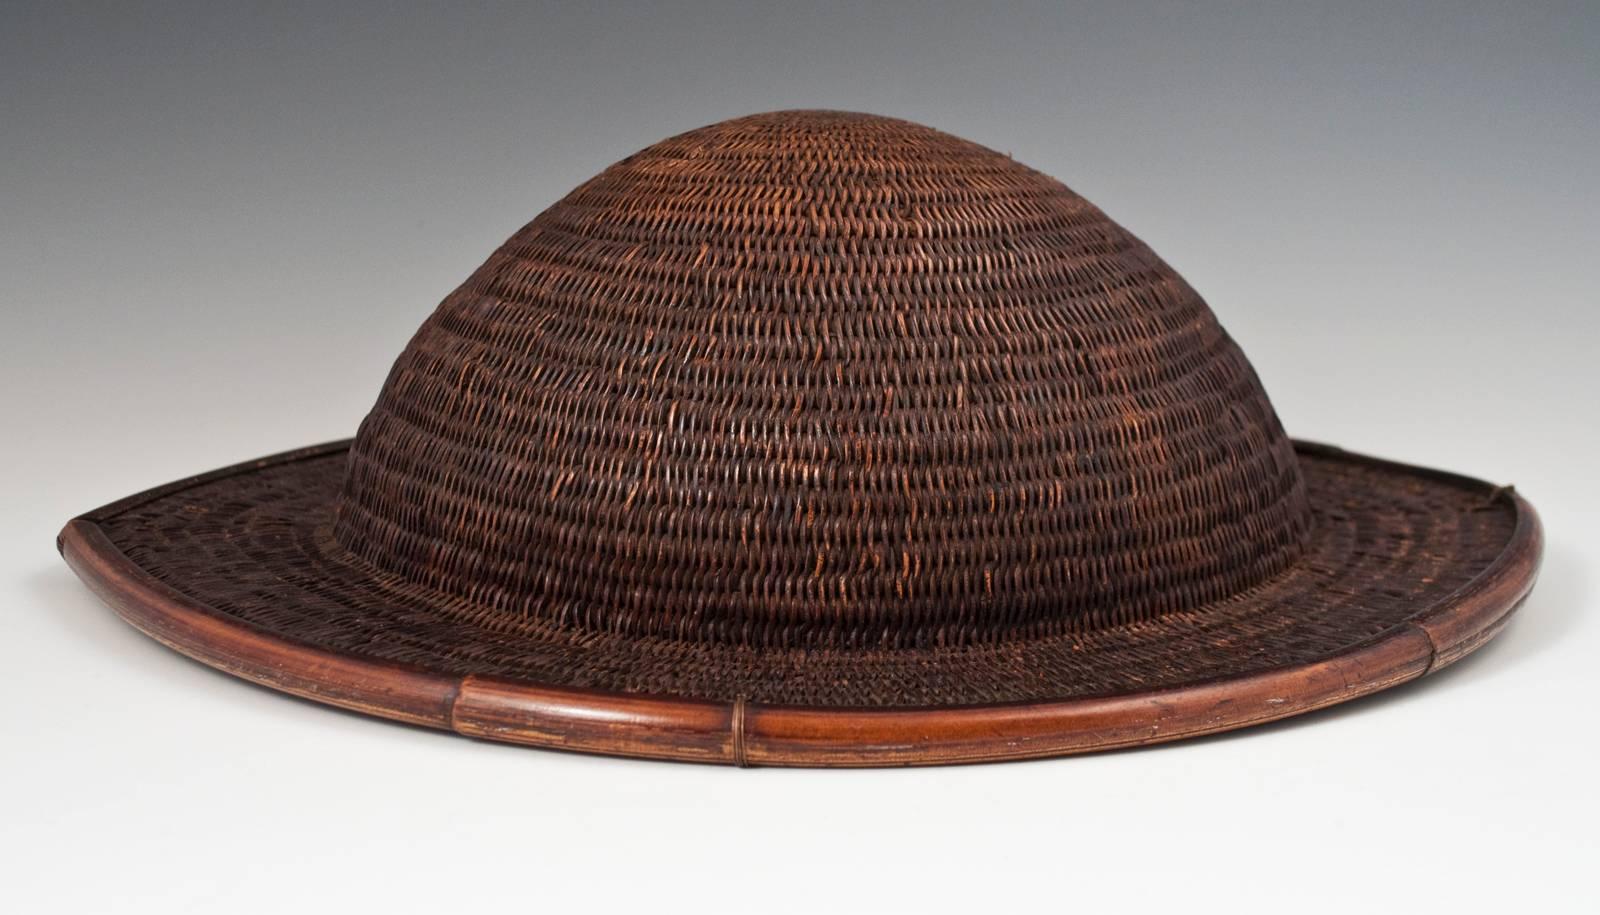 Woven Late 19th Century Tribal Rattan and Bamboo Helmet, Northeastern India